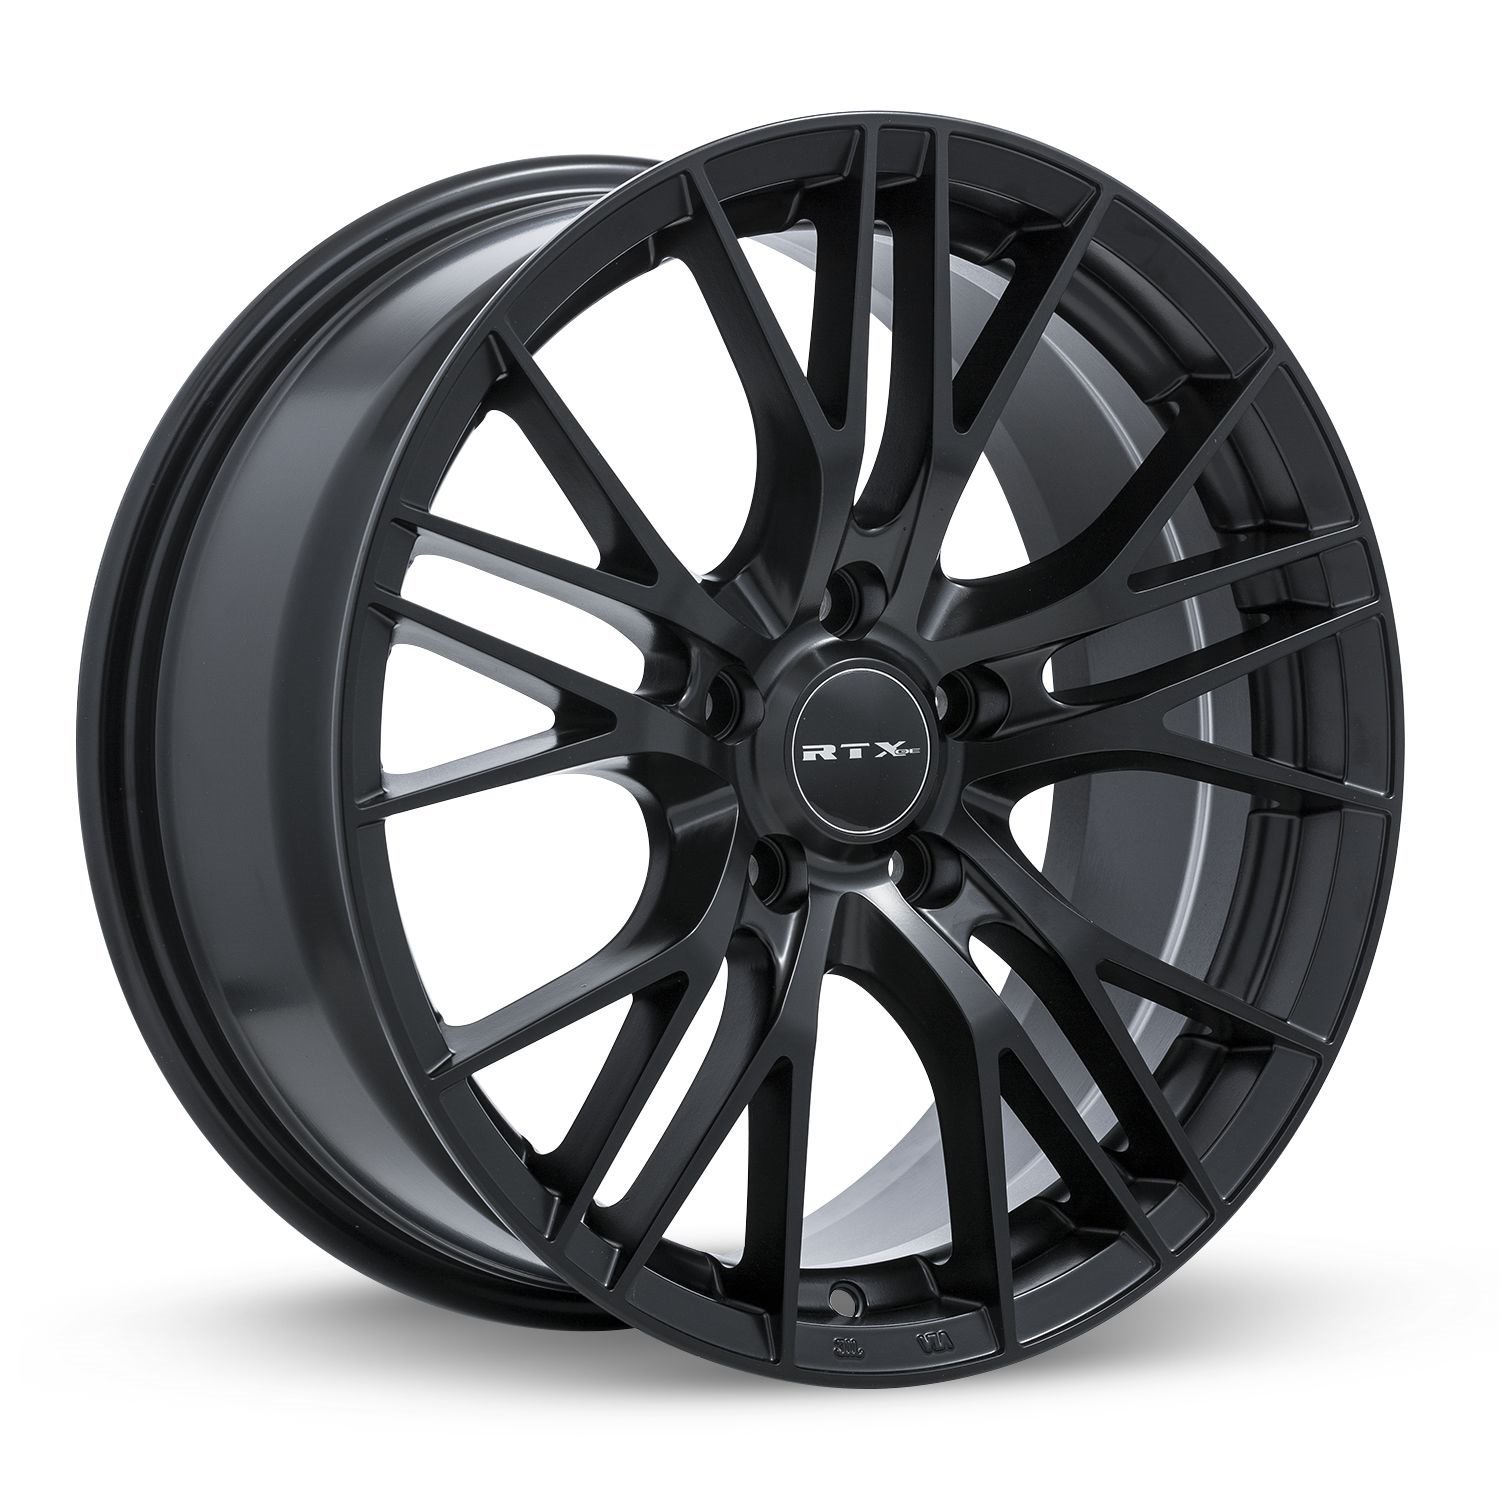 082307 RTX-Series Vertex Wheel [Size: 18" x 8"] Satin Black Finish